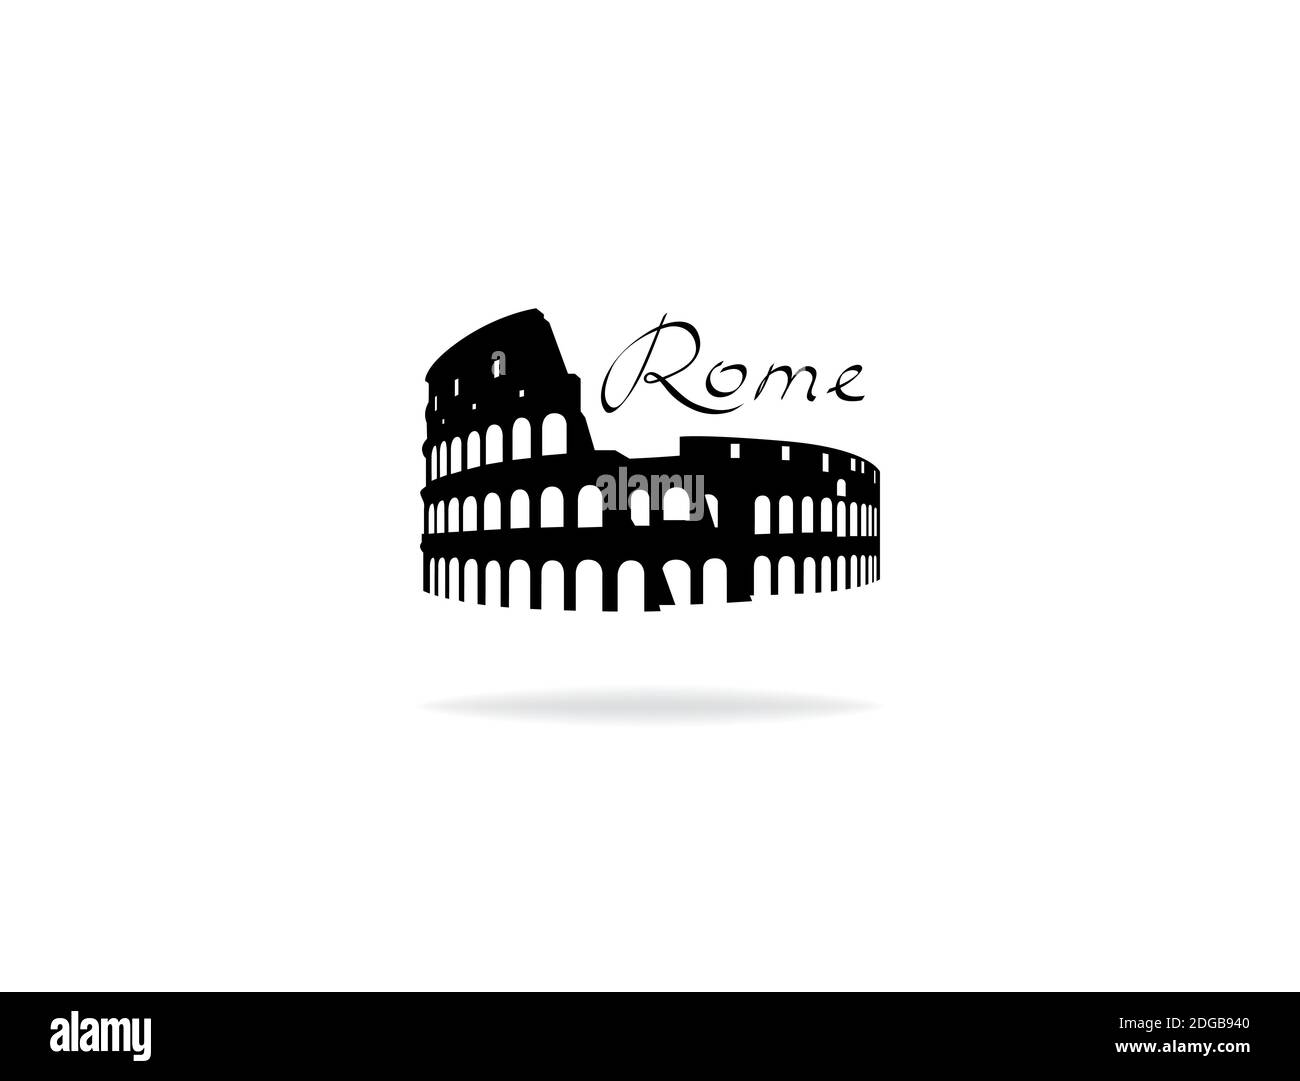 Rom Reise landark Coliseum. Italienische berühmte Place Coliseum Silhouette Ikone mit handgeschriebenen Schriftzug Rom. Stock Vektor